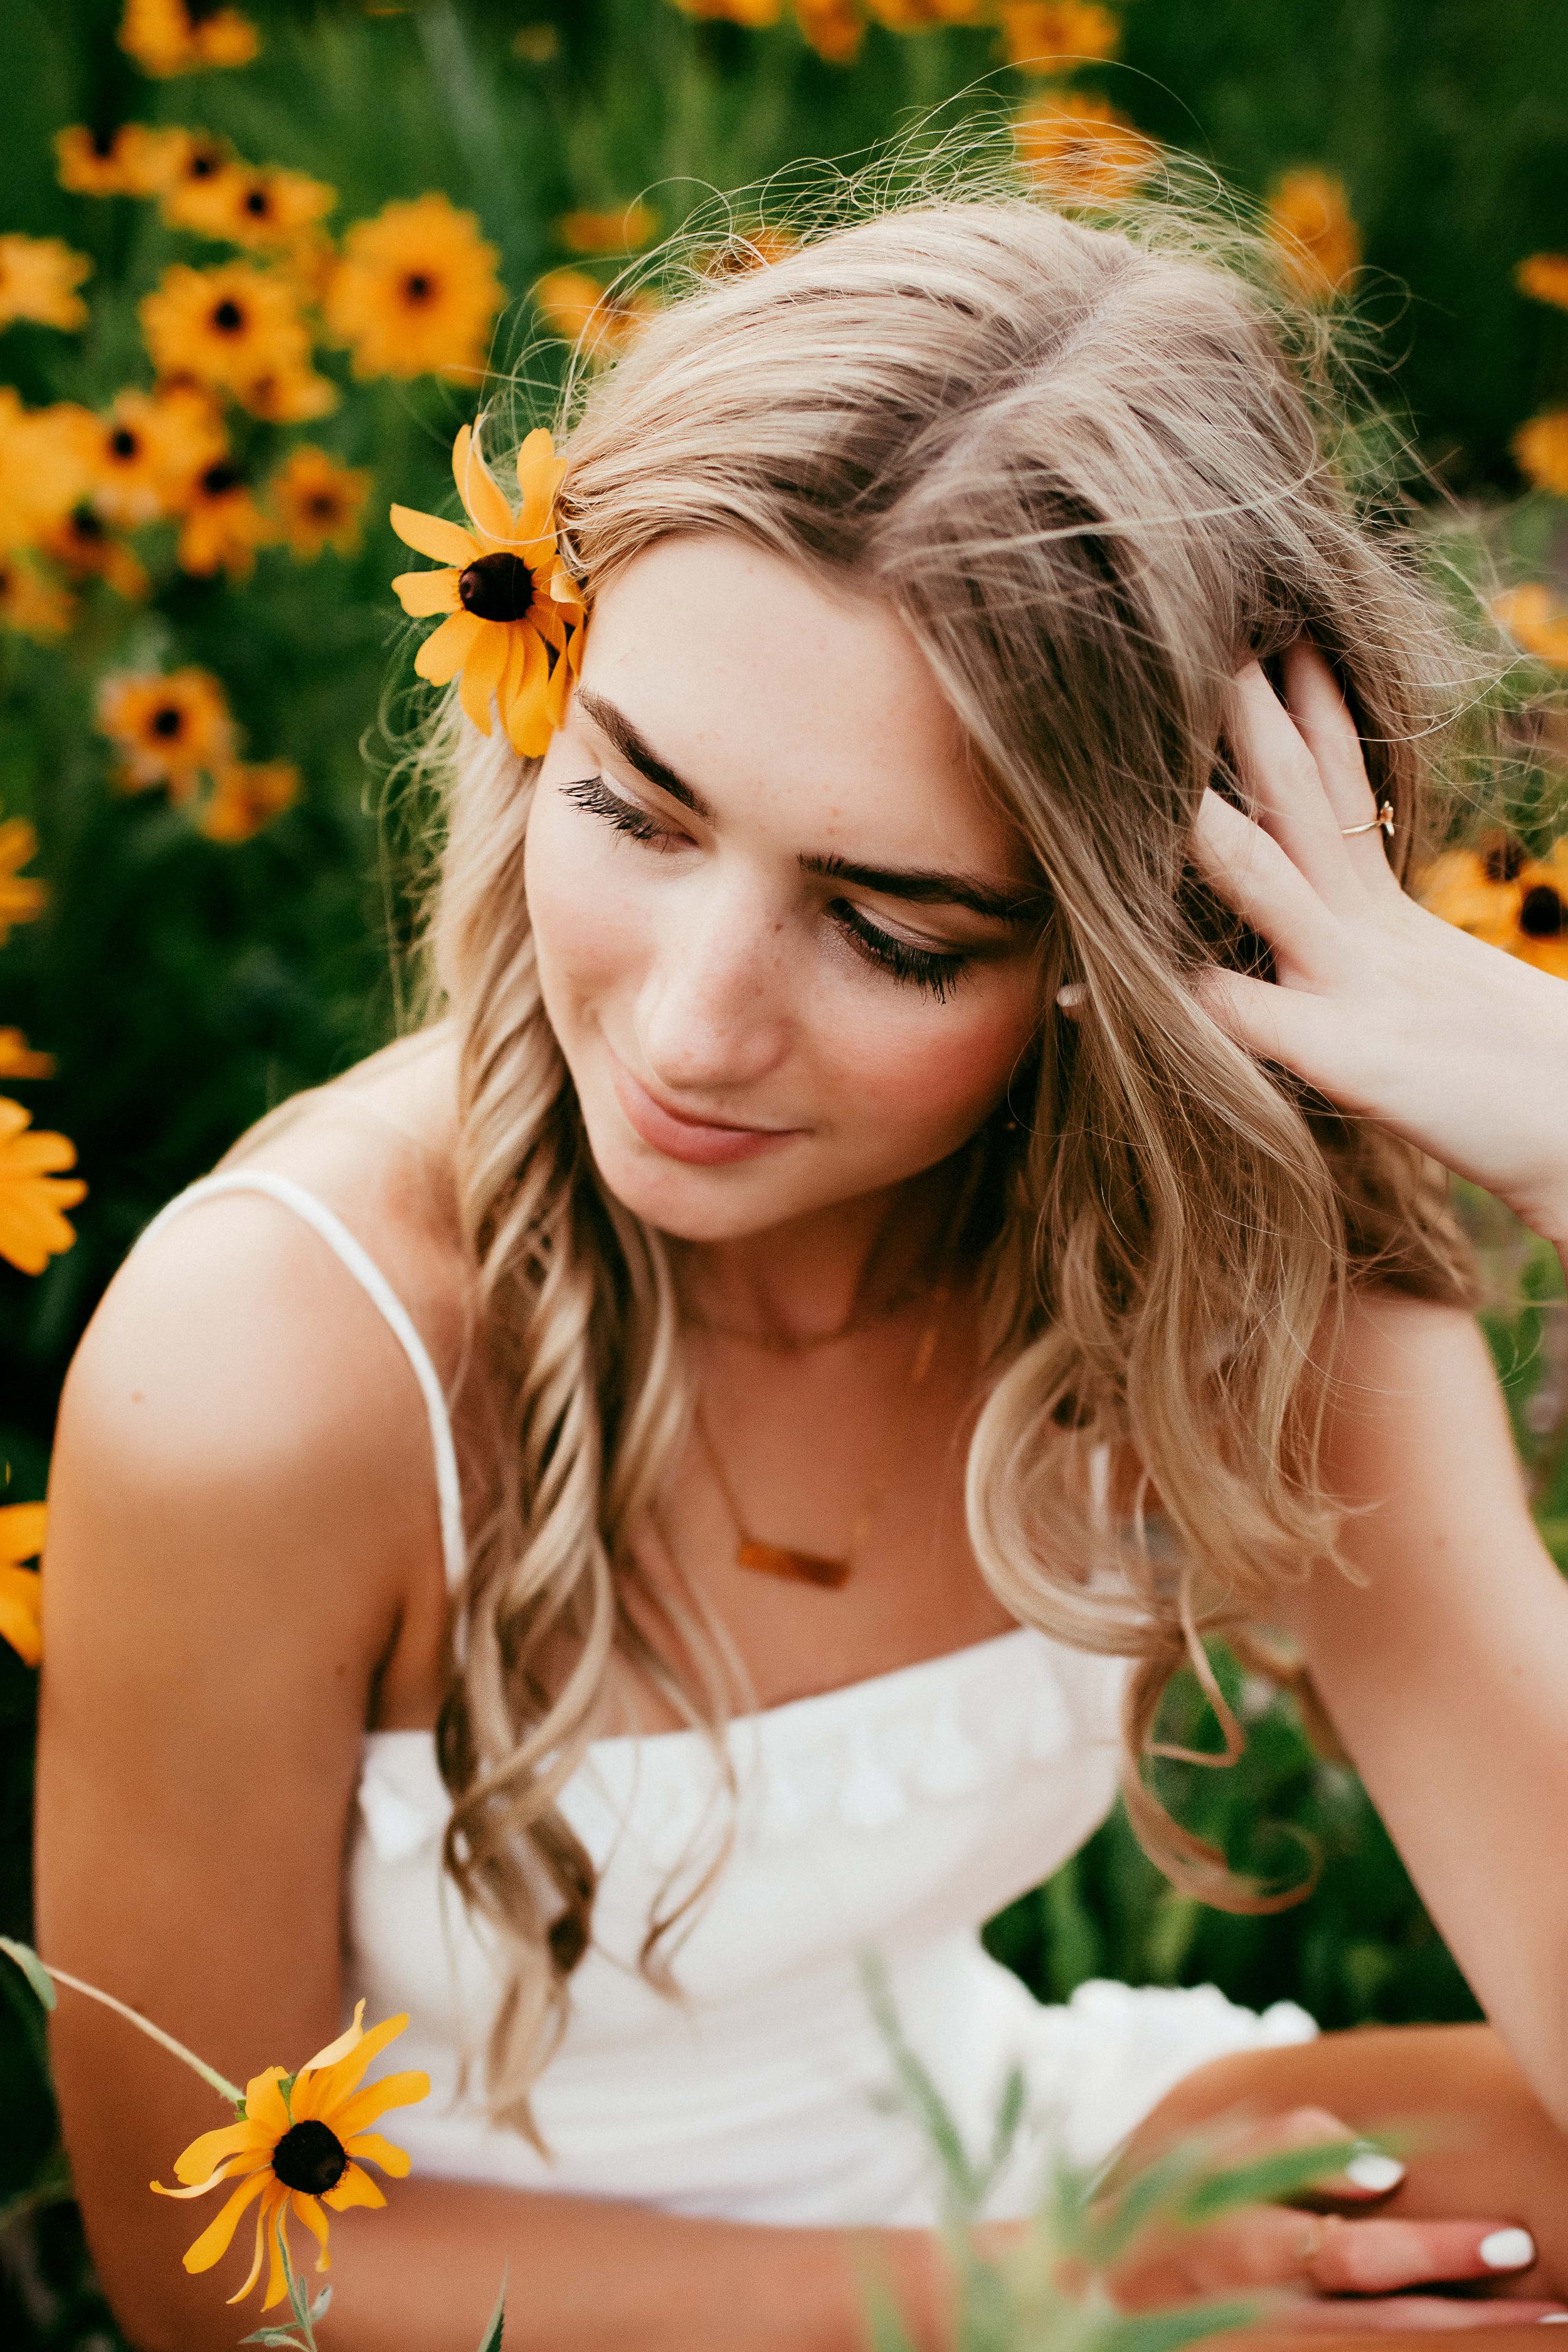 high school girl posing with flowers in her hair